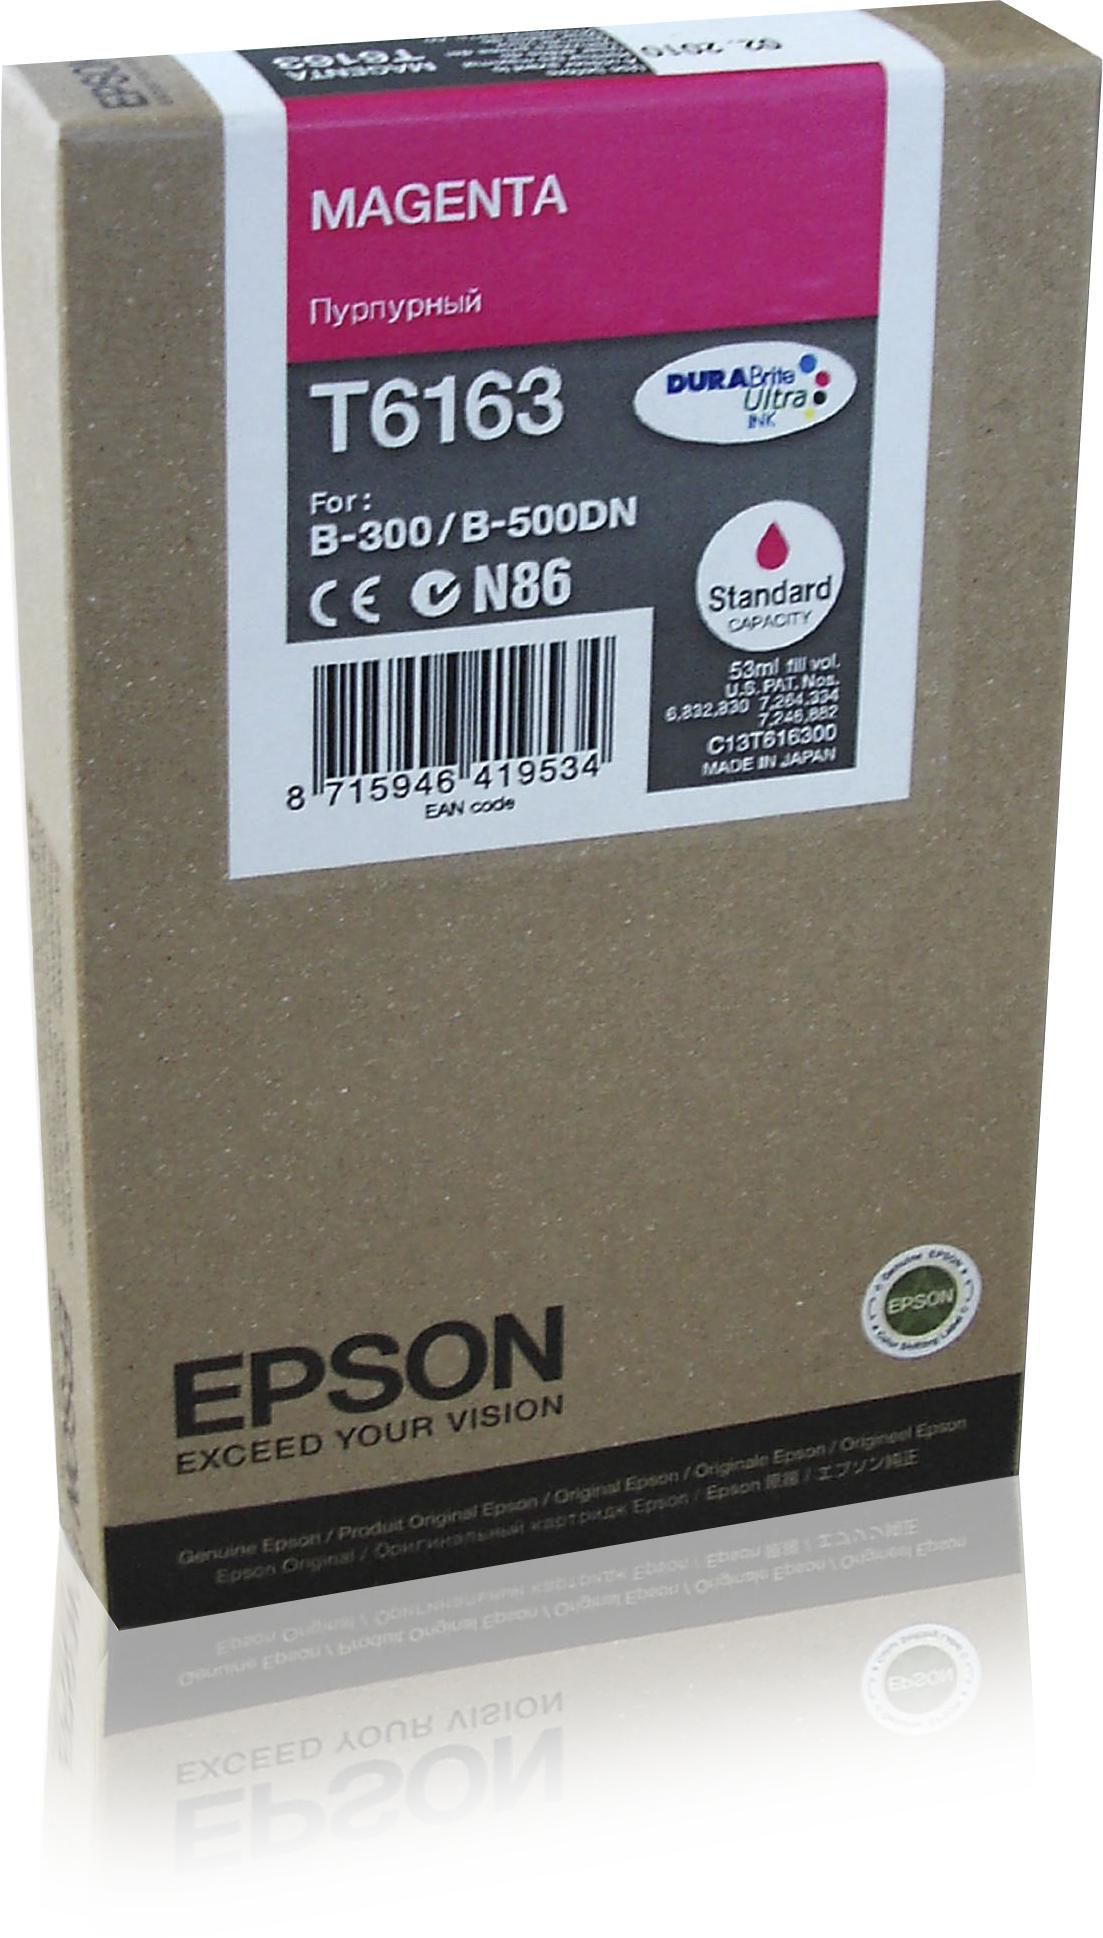 Epson C13T616300 Ink Magenta 